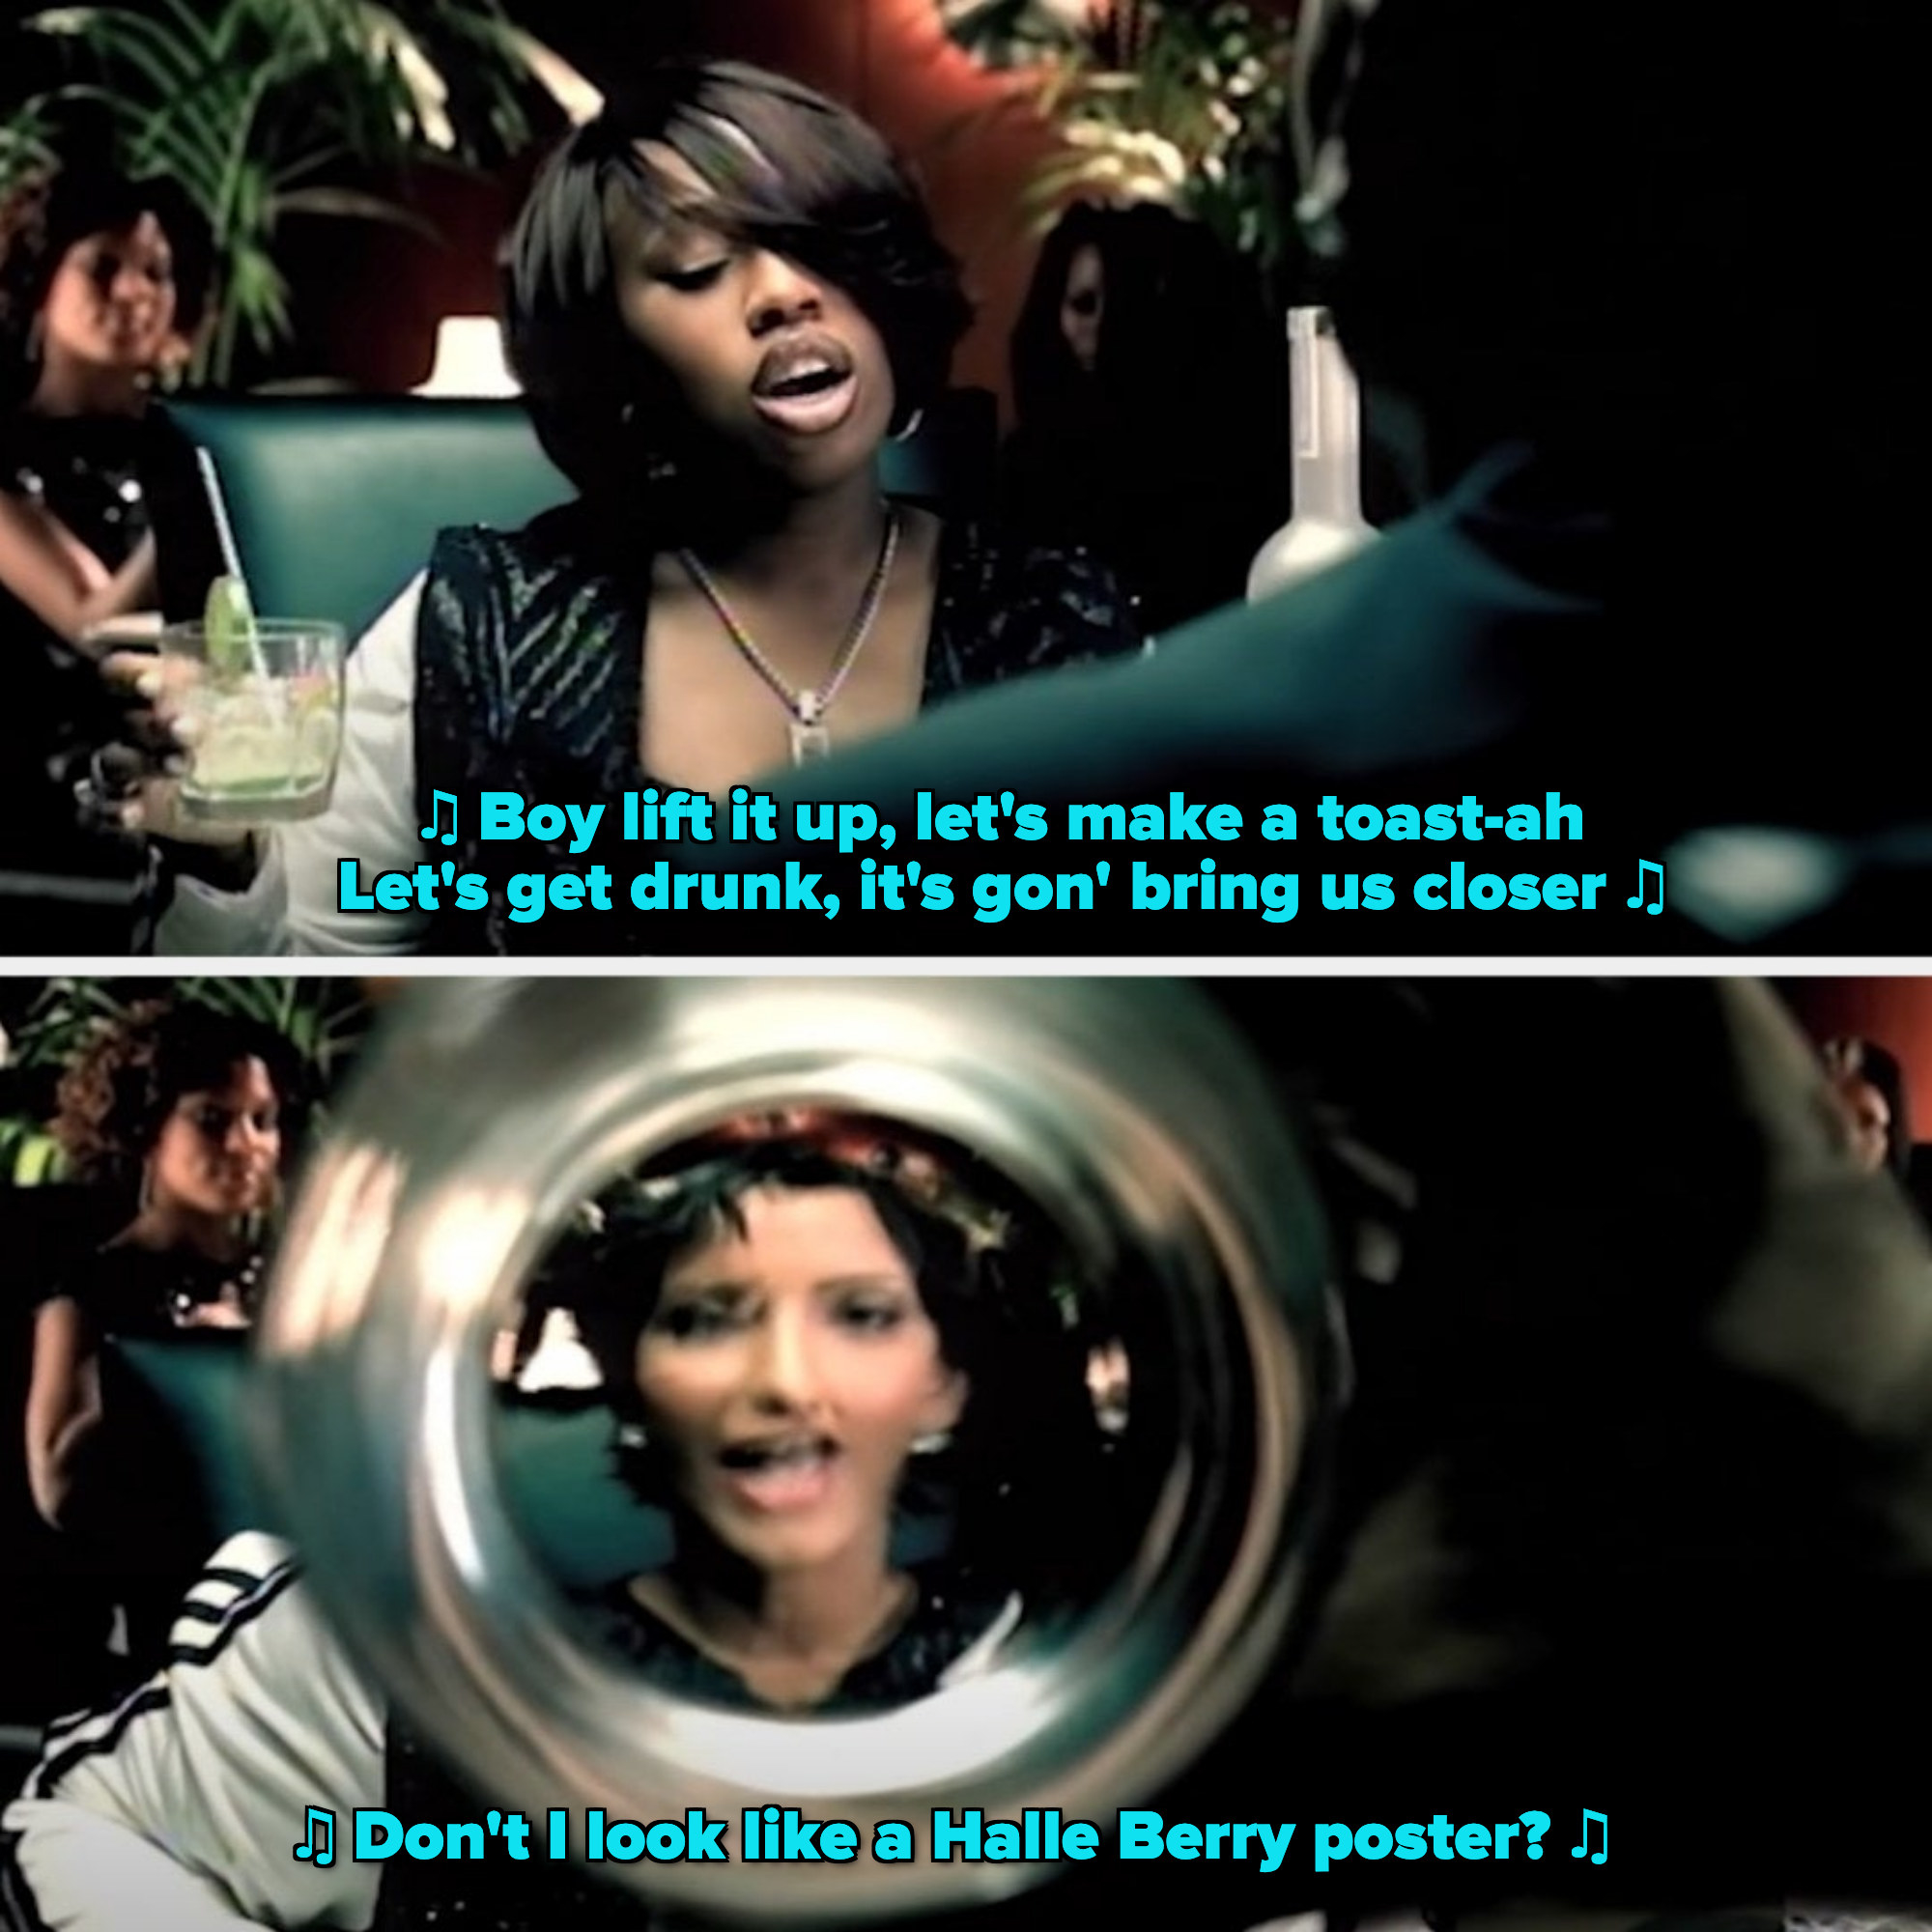 Missy Elliott in her &quot;Work It&quot; music video